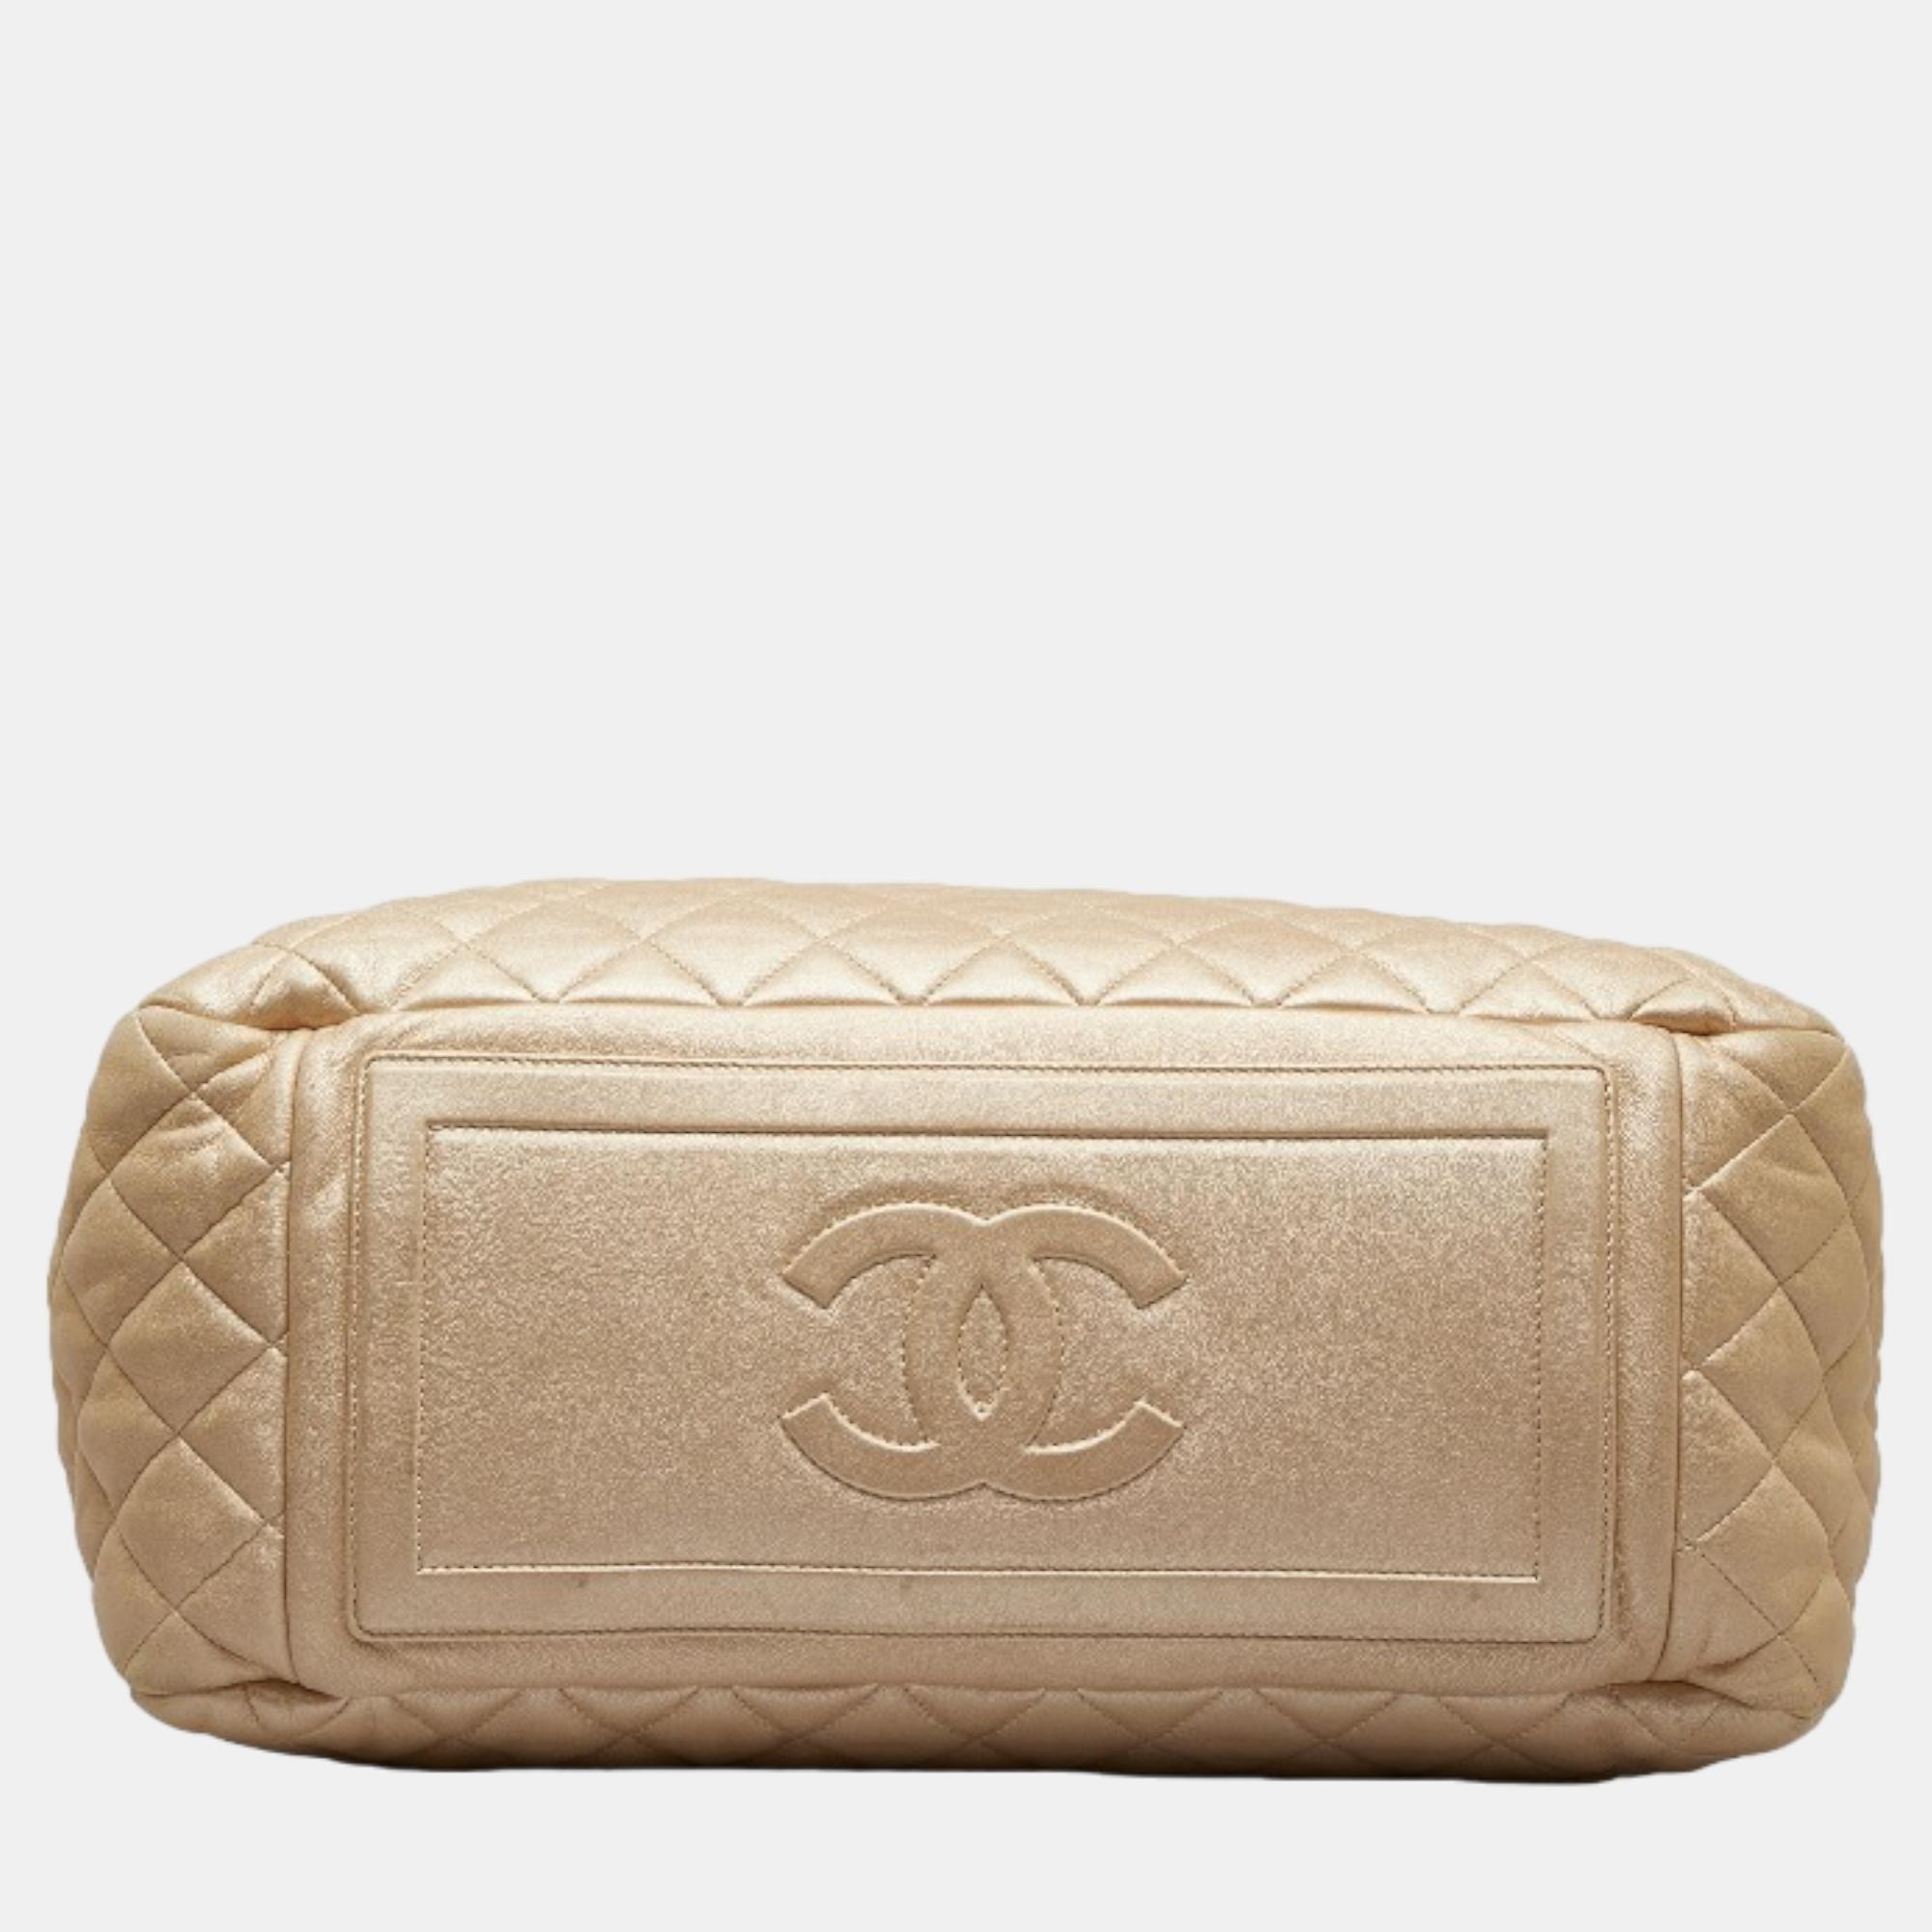 Chanel Gold Leather CC Cocoon Handbag